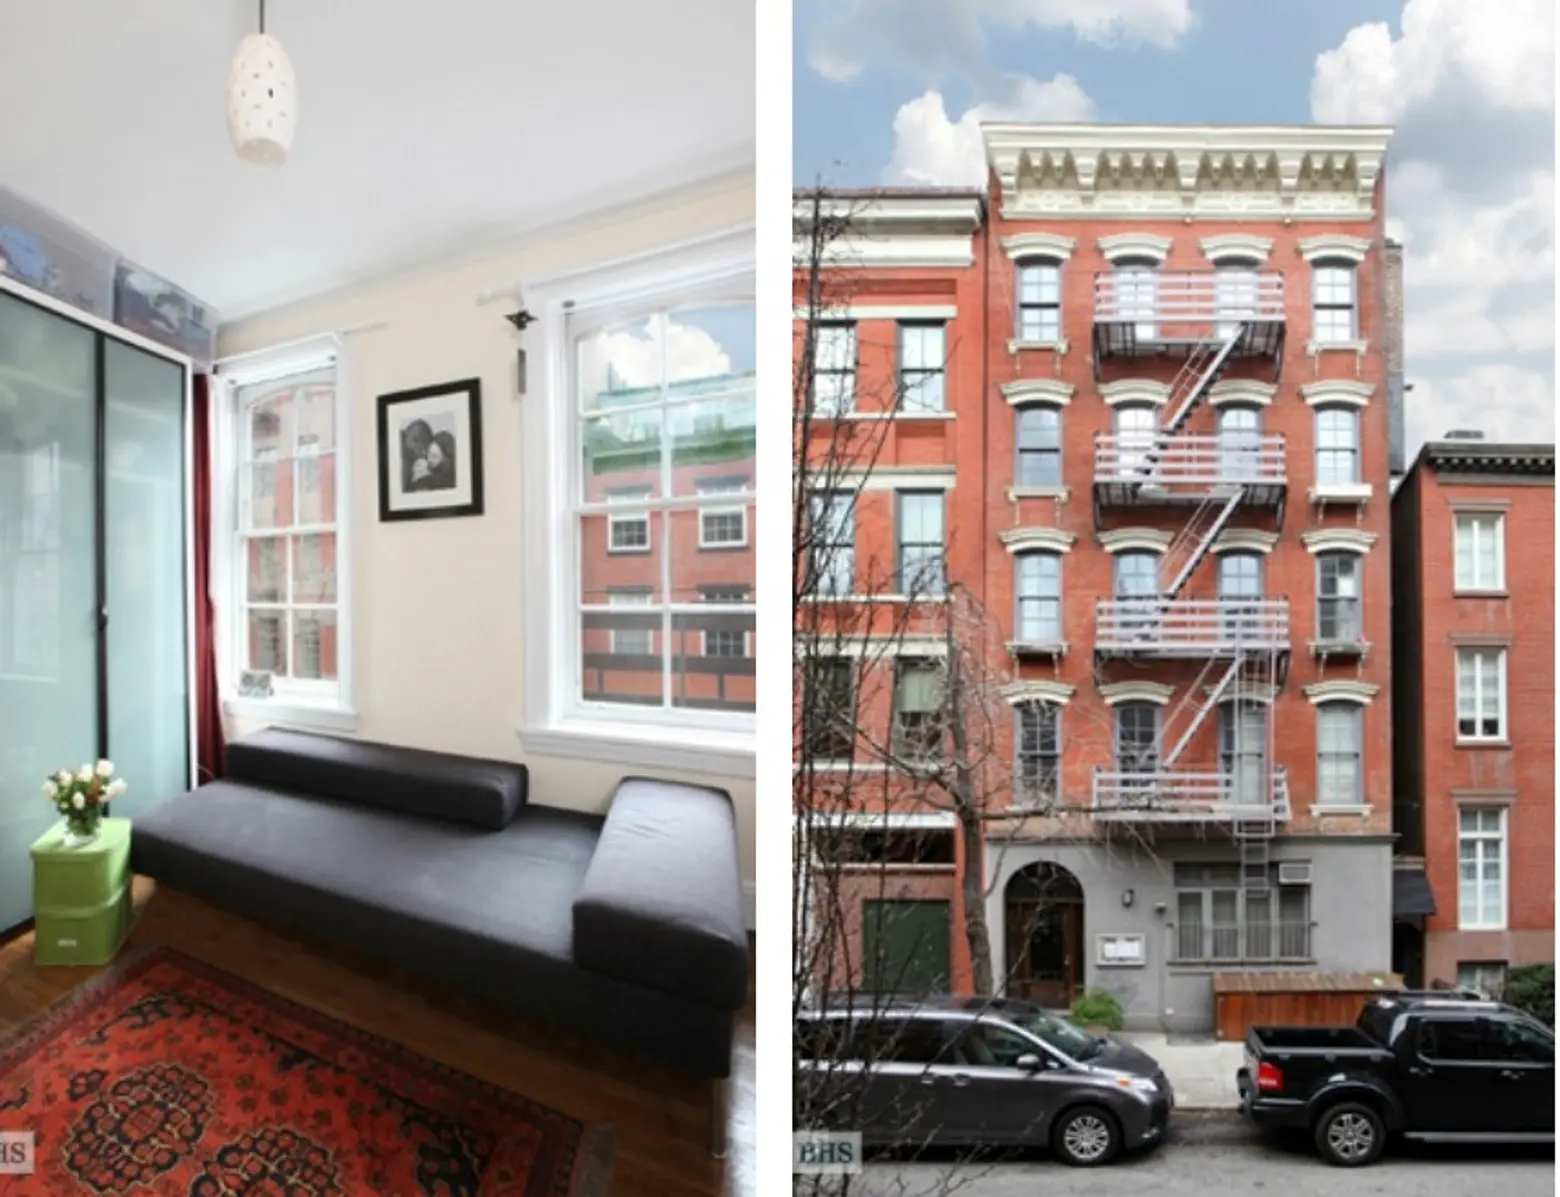 29 Perry Street, West Village, Rental, Short-term Rental, Furnished Rental, furnished apartment for rent